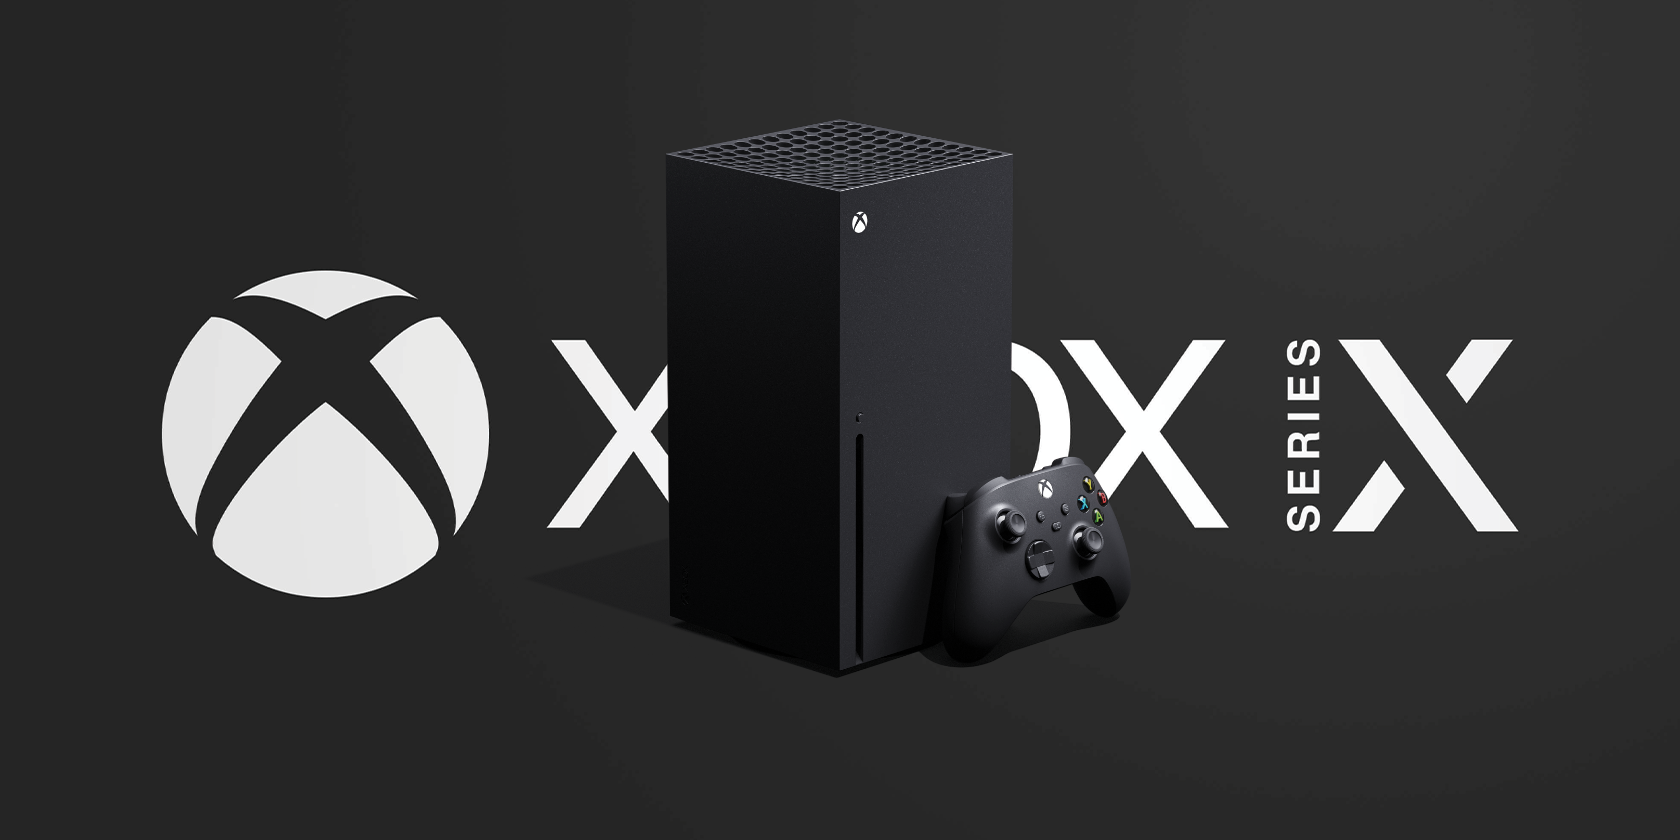 xbox series x on series x logo background